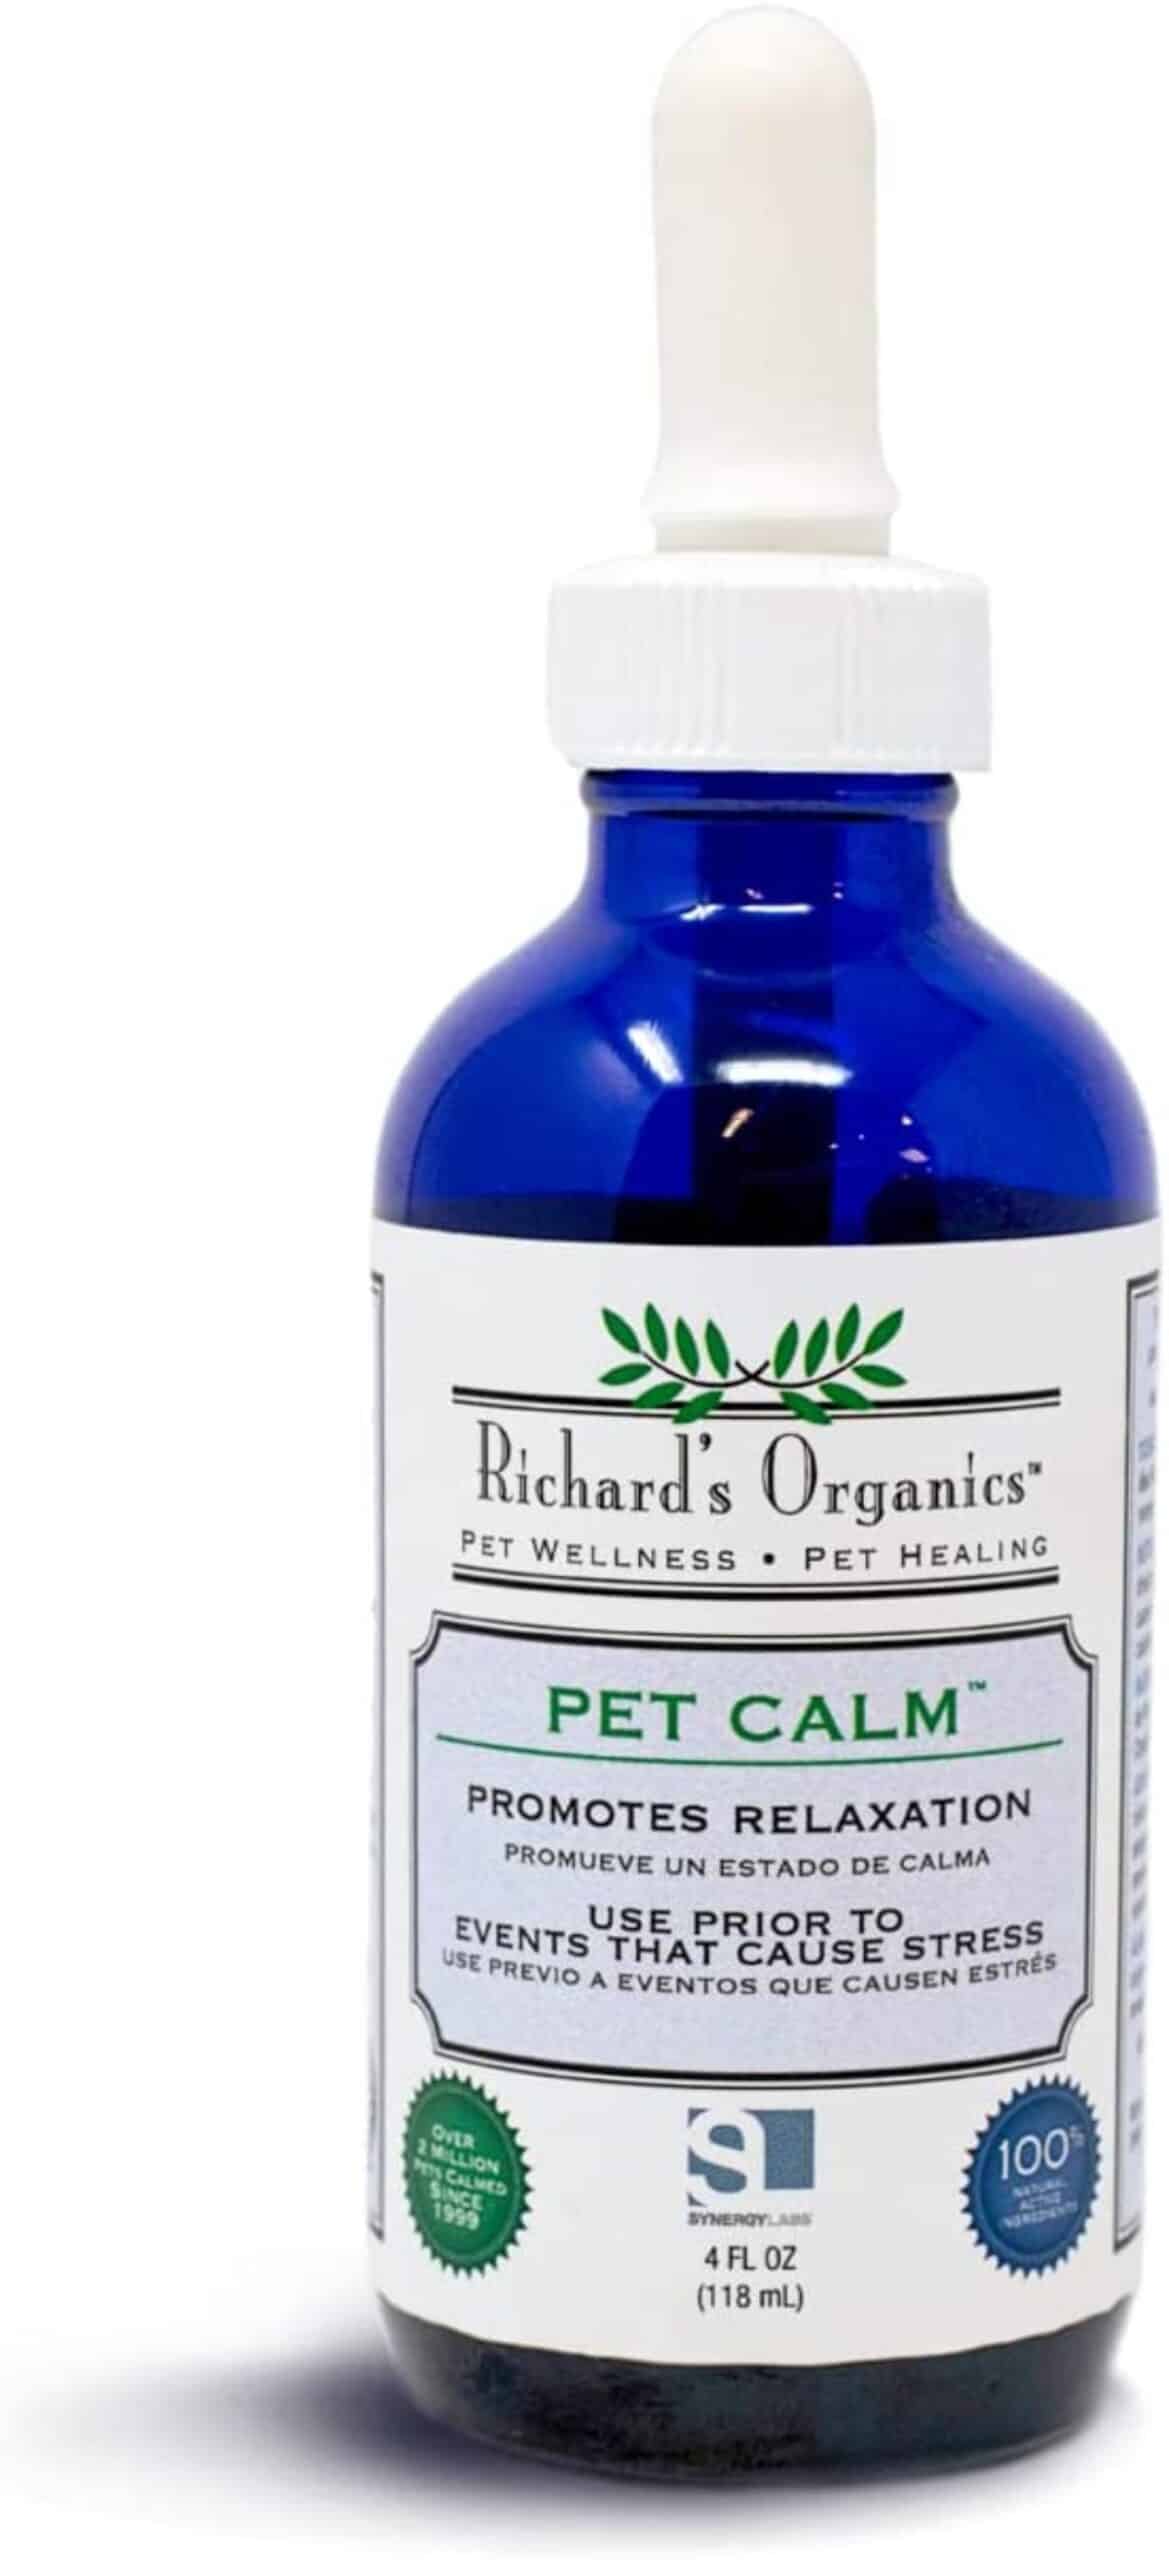 Richard’s Organics Pet Calm